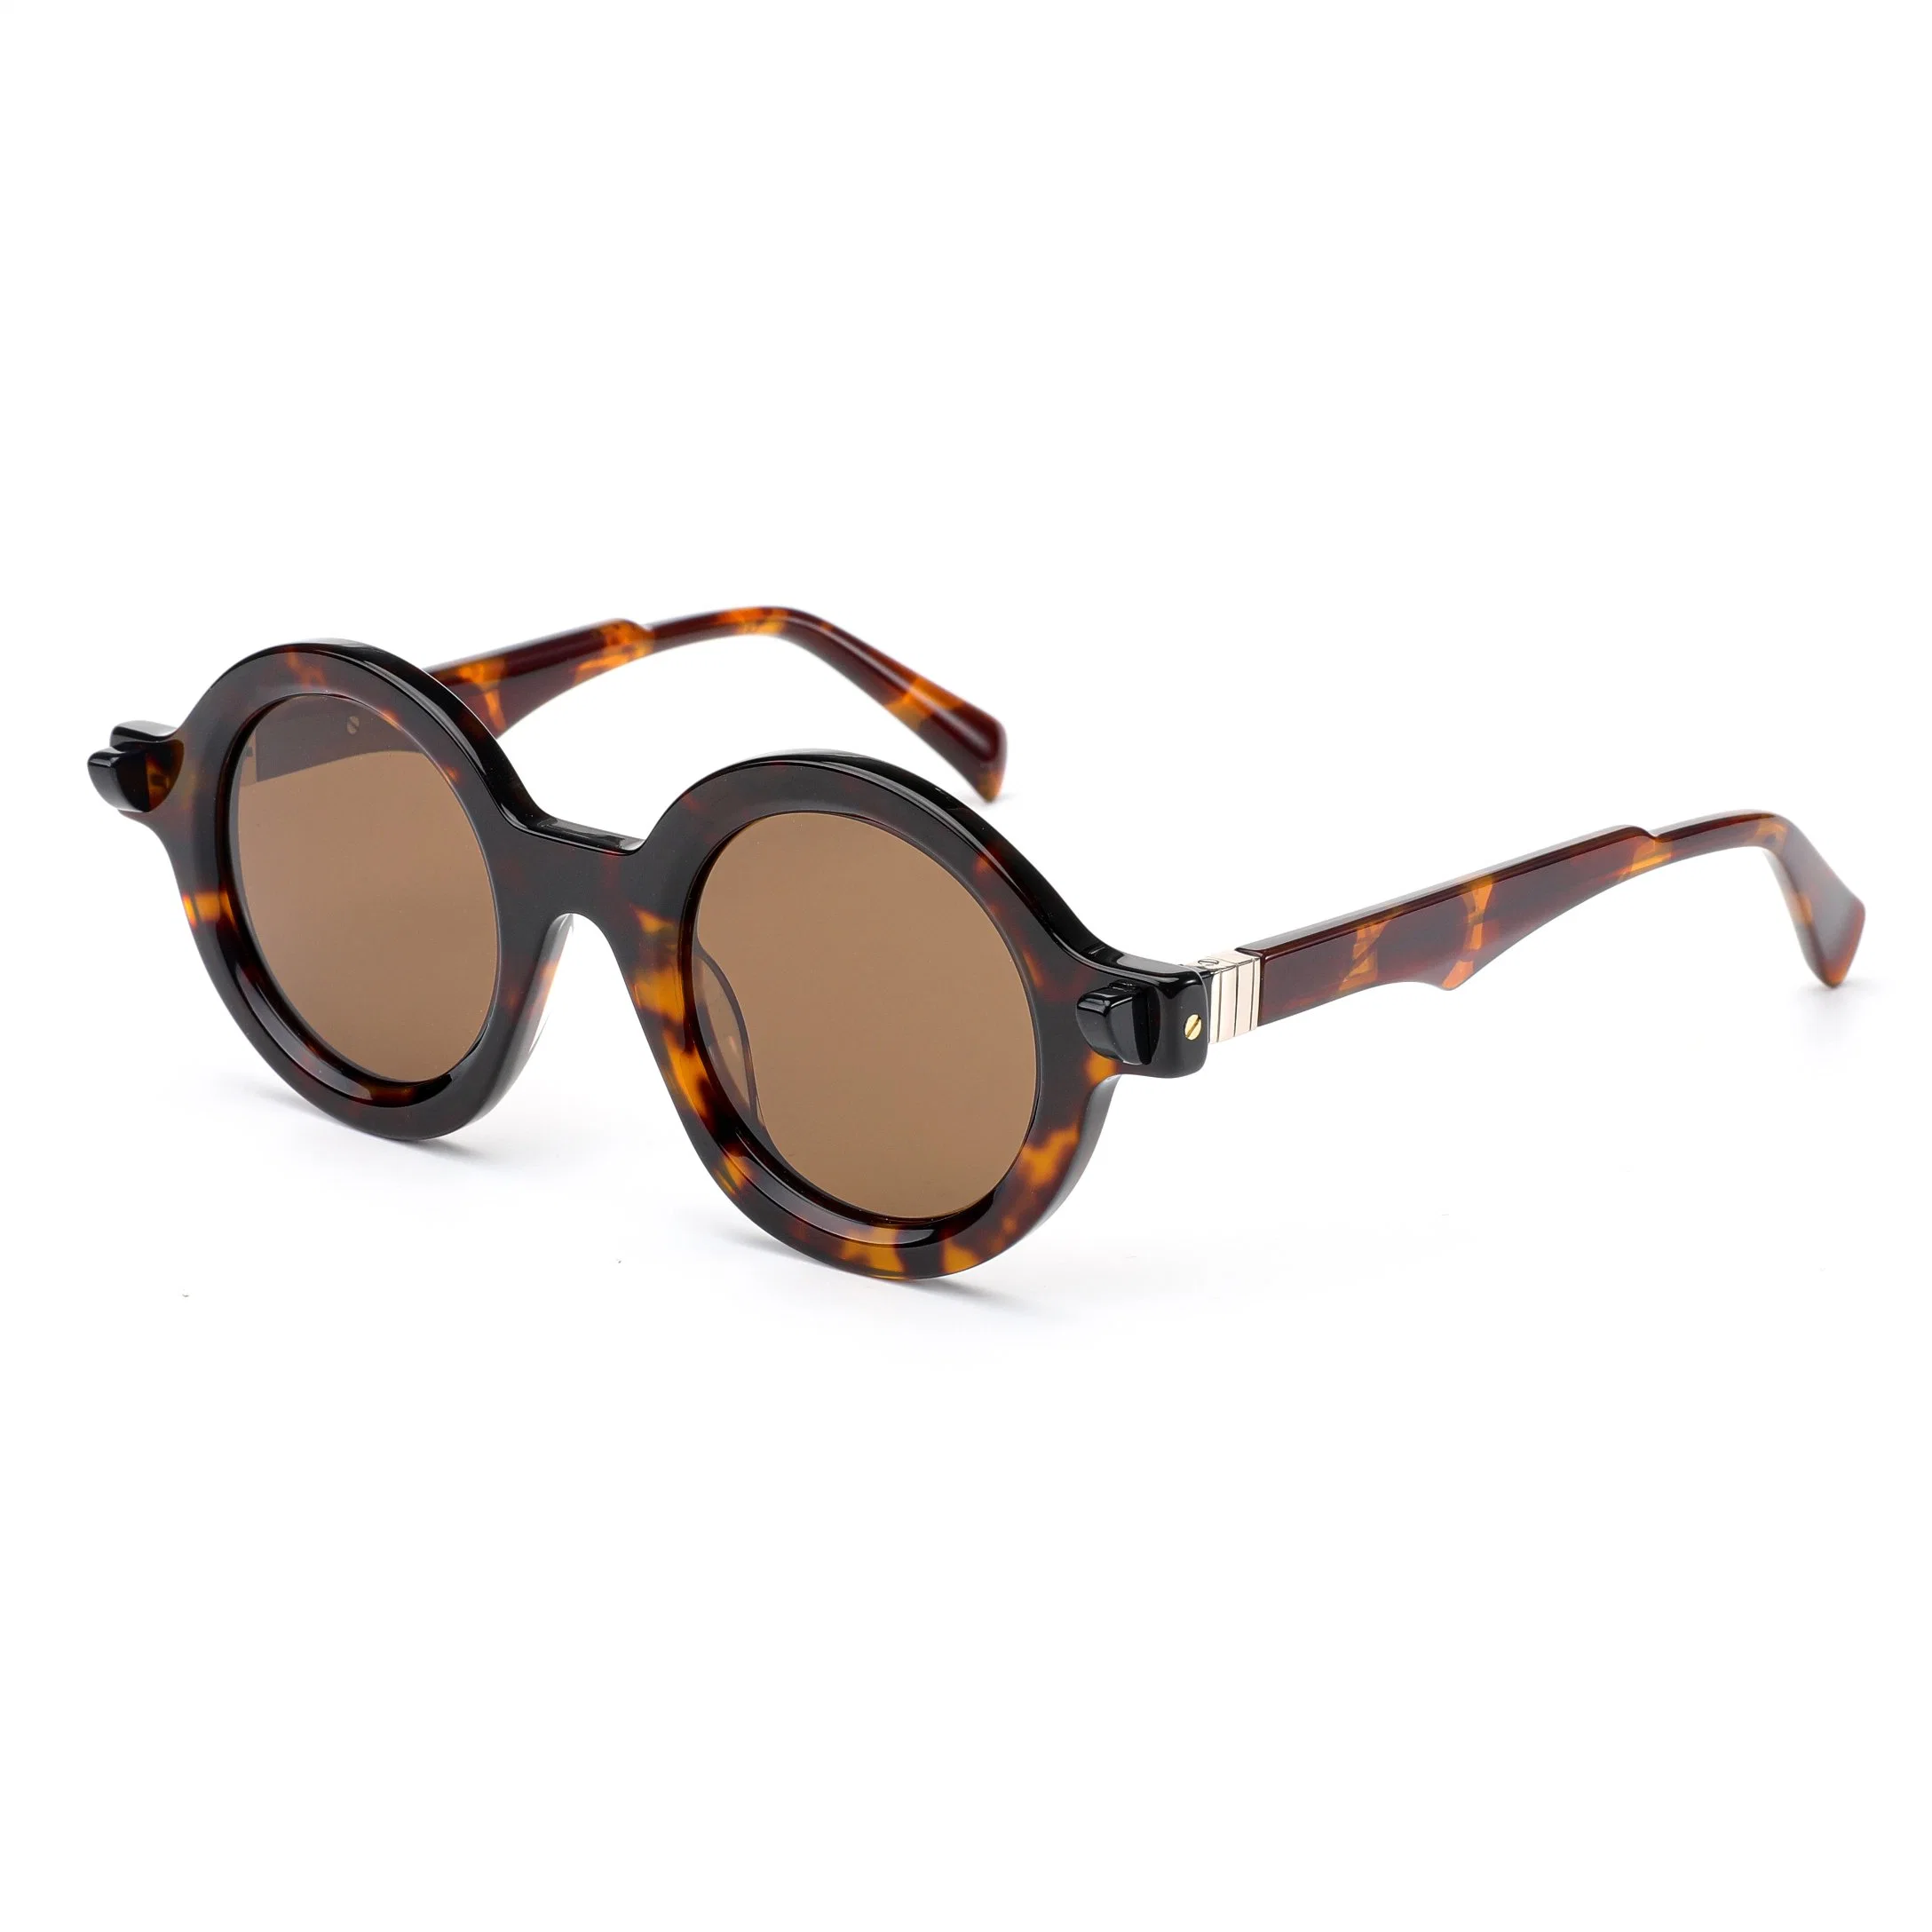 Best Quality Design Endpiece Acetate Shades Frame Fashionable Polariod Sunglasses